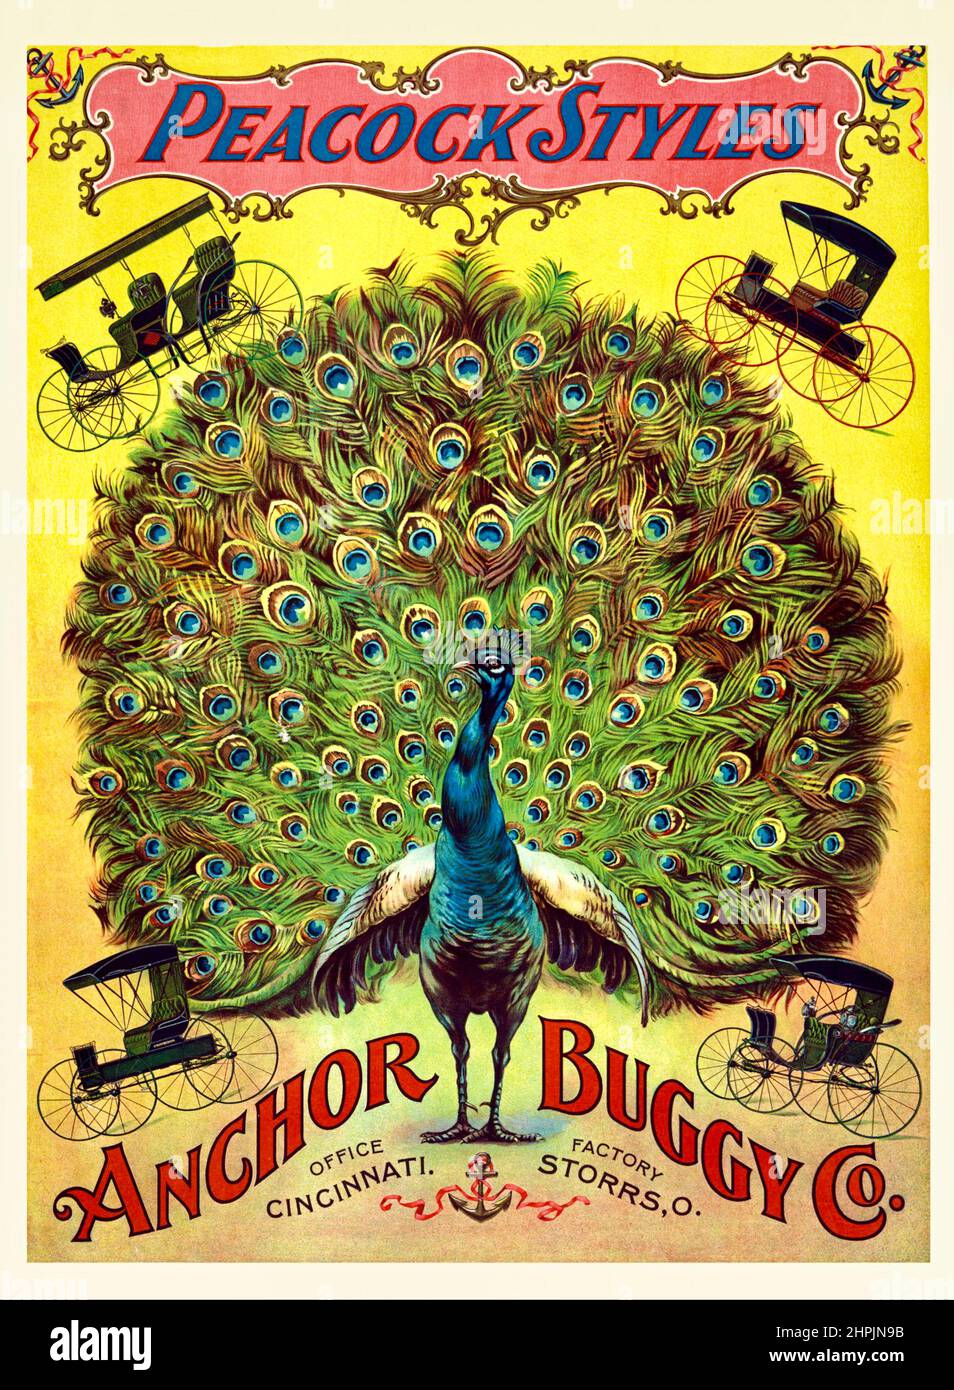 Peacock Styles - Anchor Buggy Company - c1897 Stock Photo